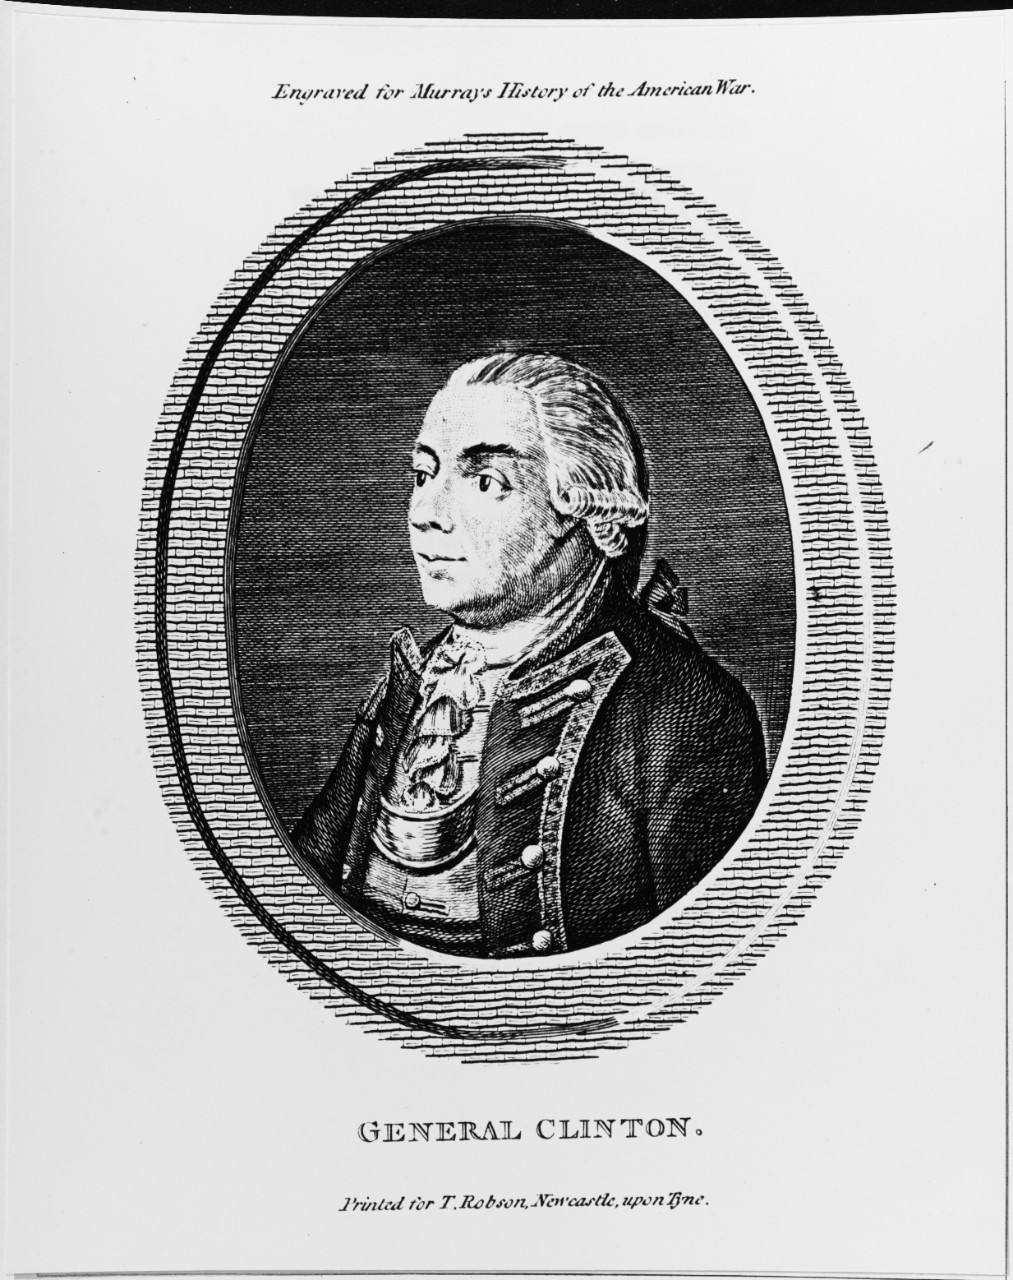 Sir Henry Clinton (1738?-1795), British General